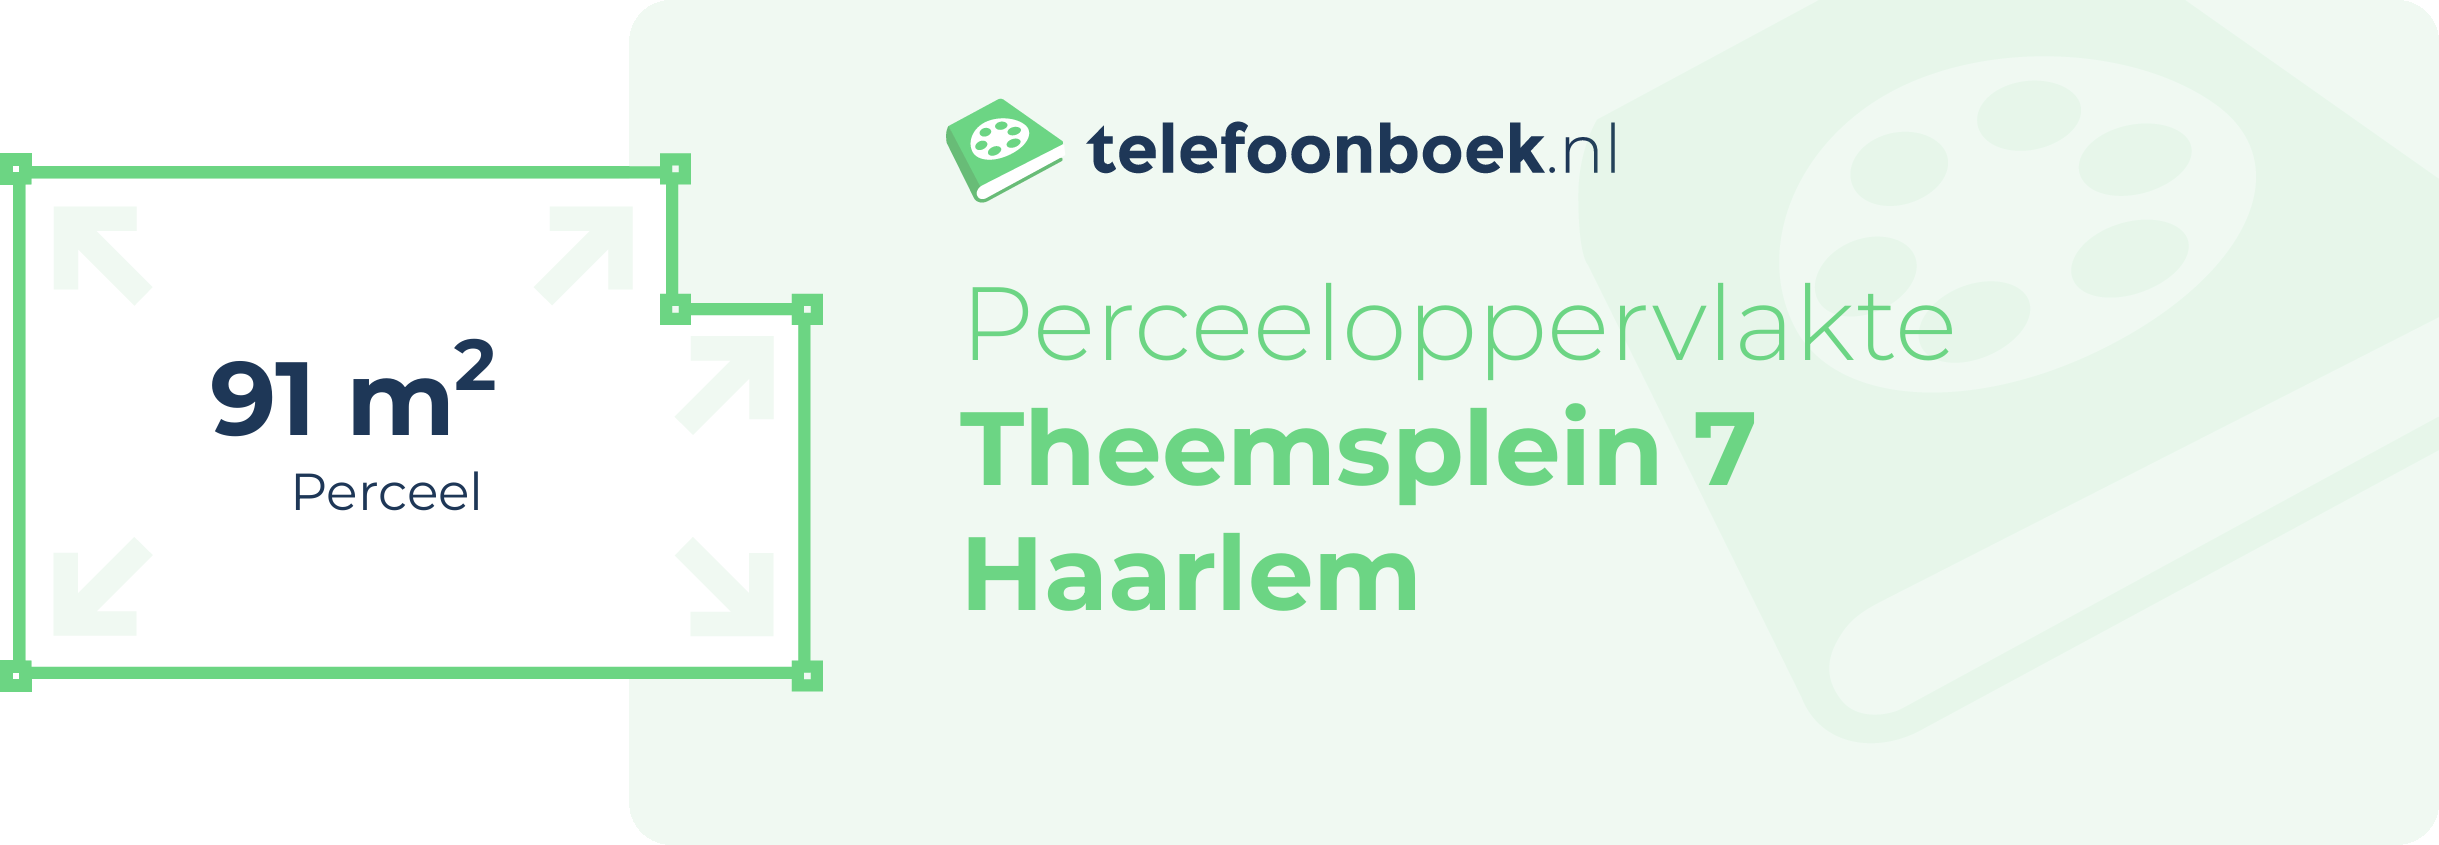 Perceeloppervlakte Theemsplein 7 Haarlem